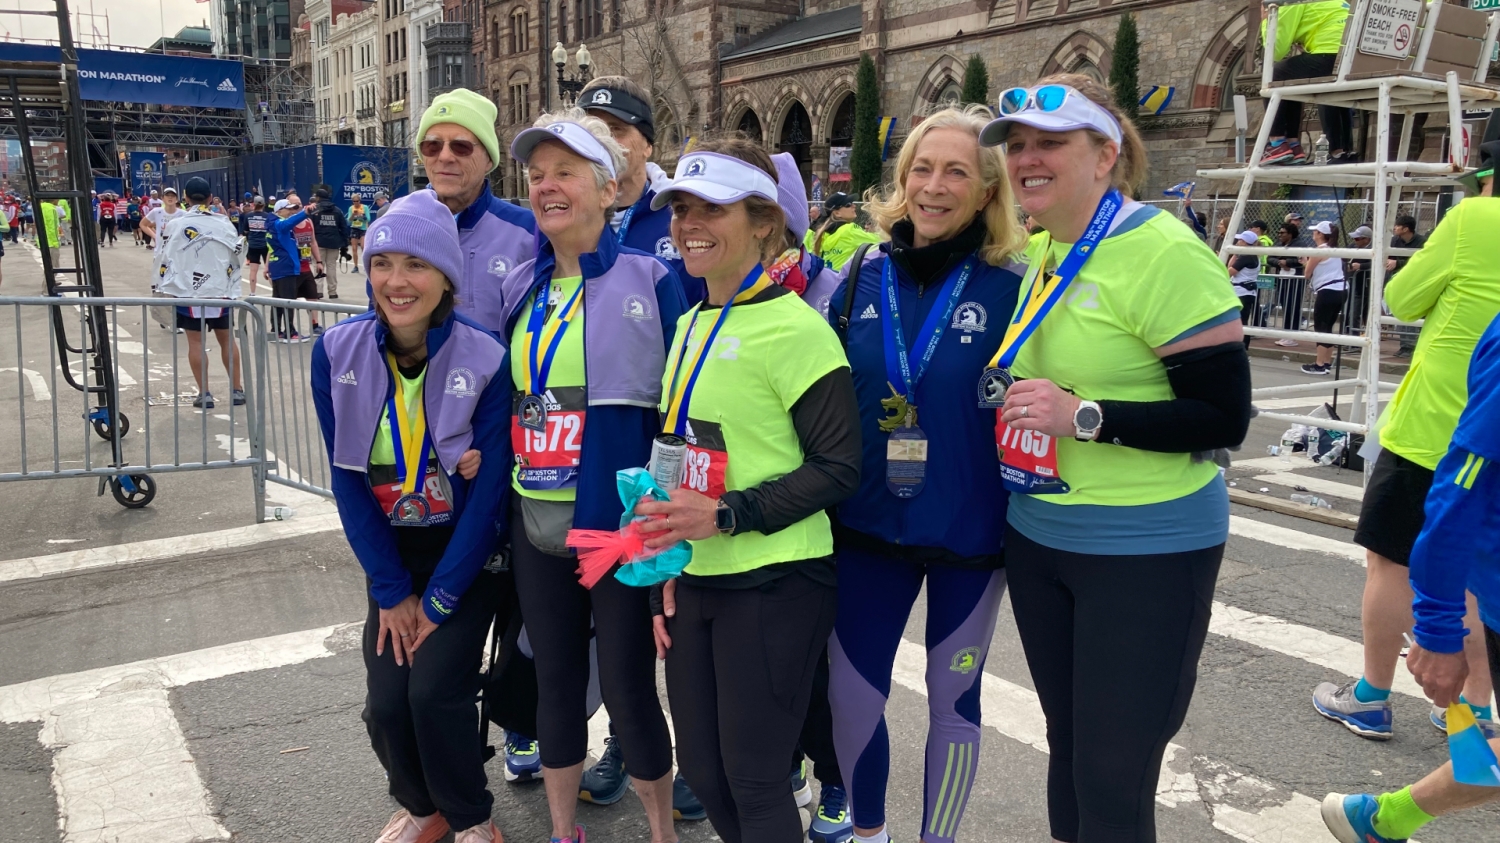 Val Rogosheske Finishes Boston Marathon To Celebrate 50th Anniversary